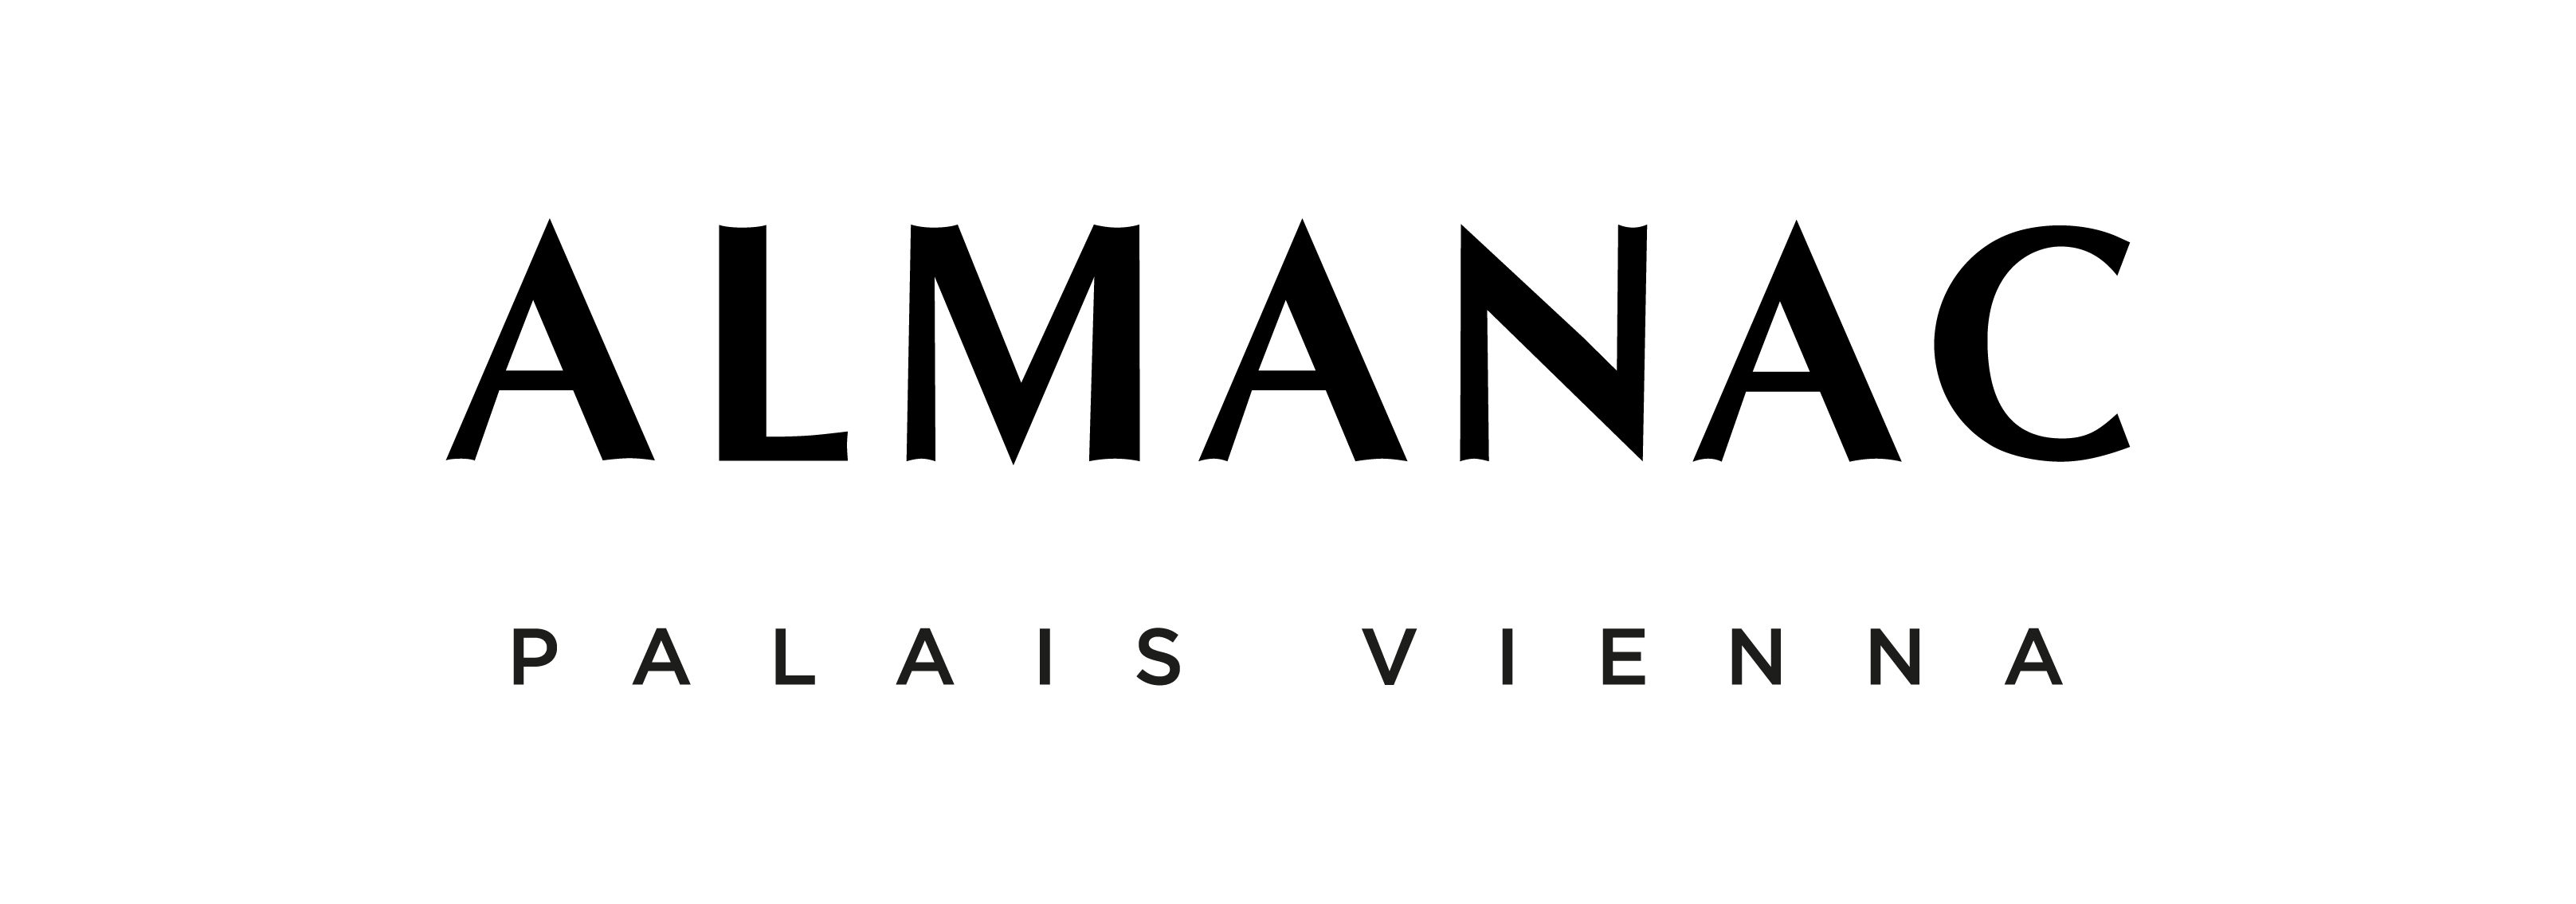 Karriere bei Almanac Palais Vienna